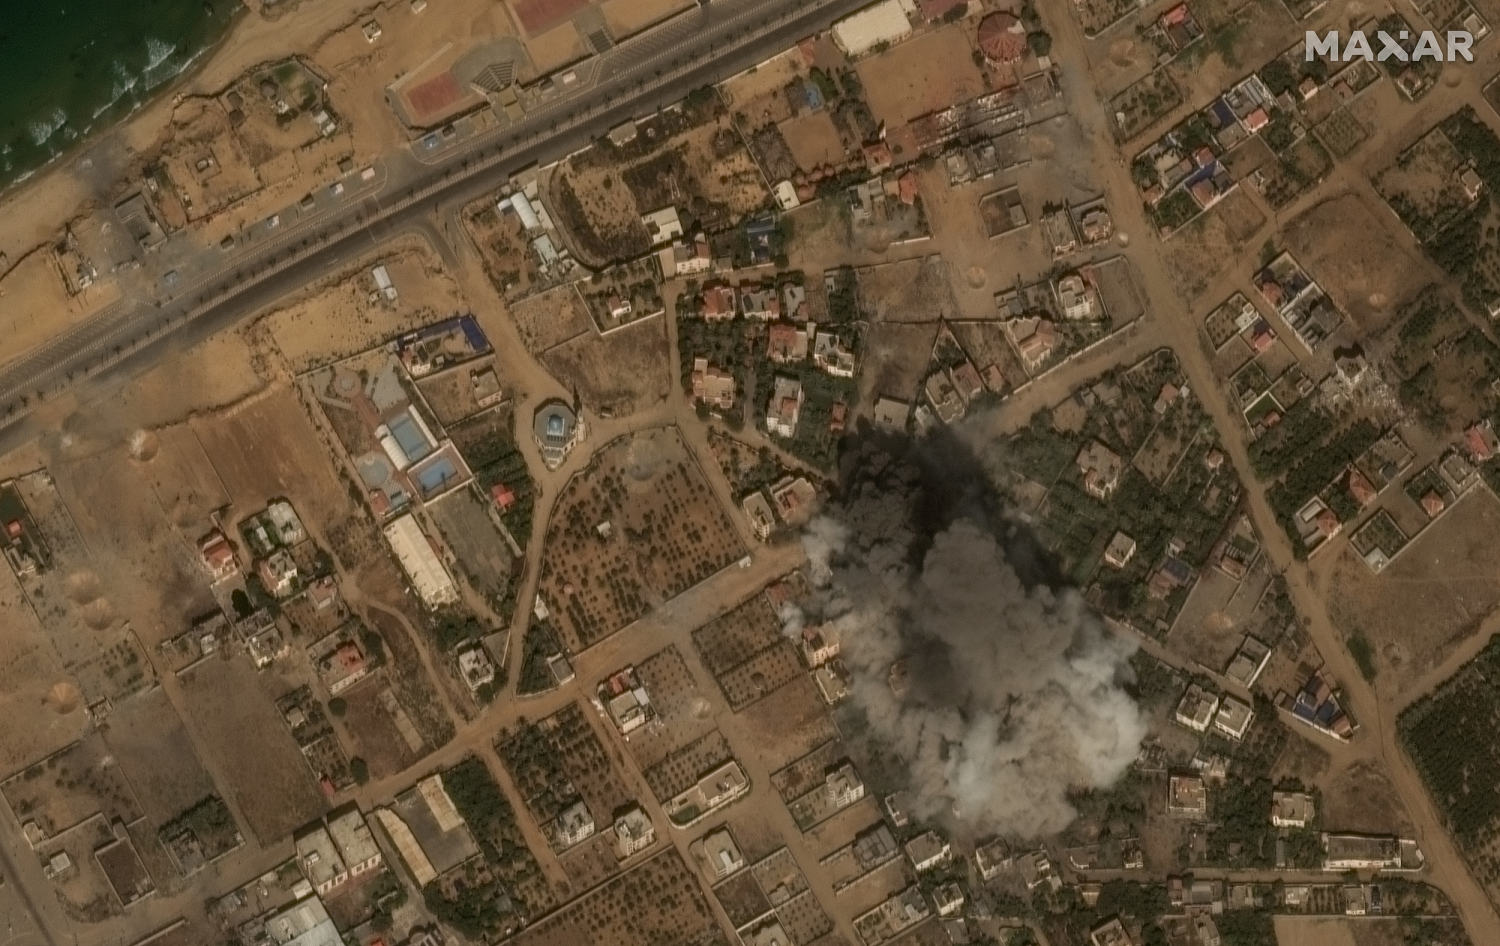 Satellite images show devastation in Gaza after Israeli airstrikes